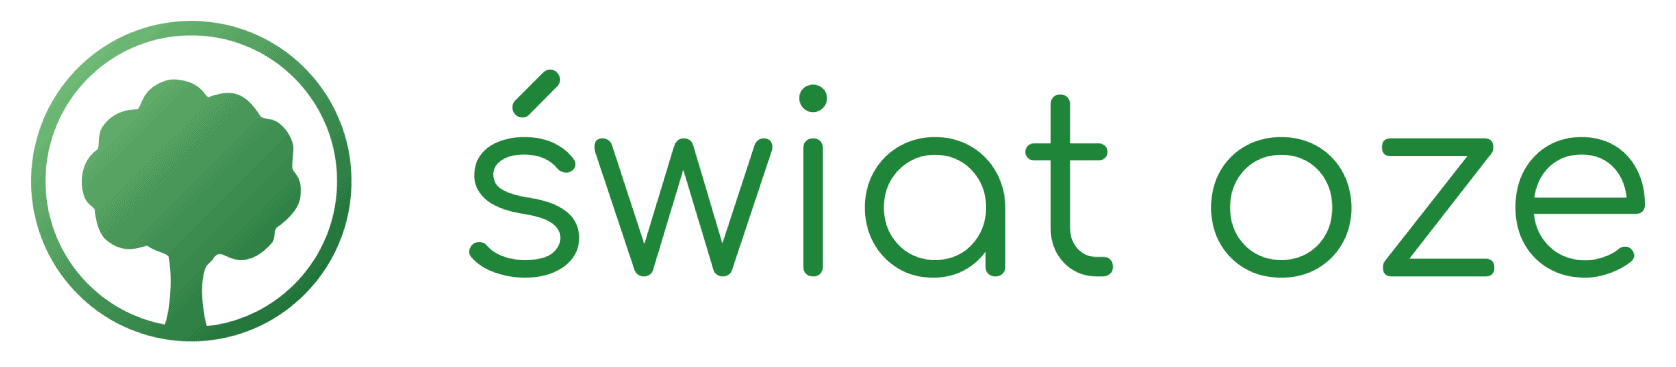 logo-swiatoze-1.webp